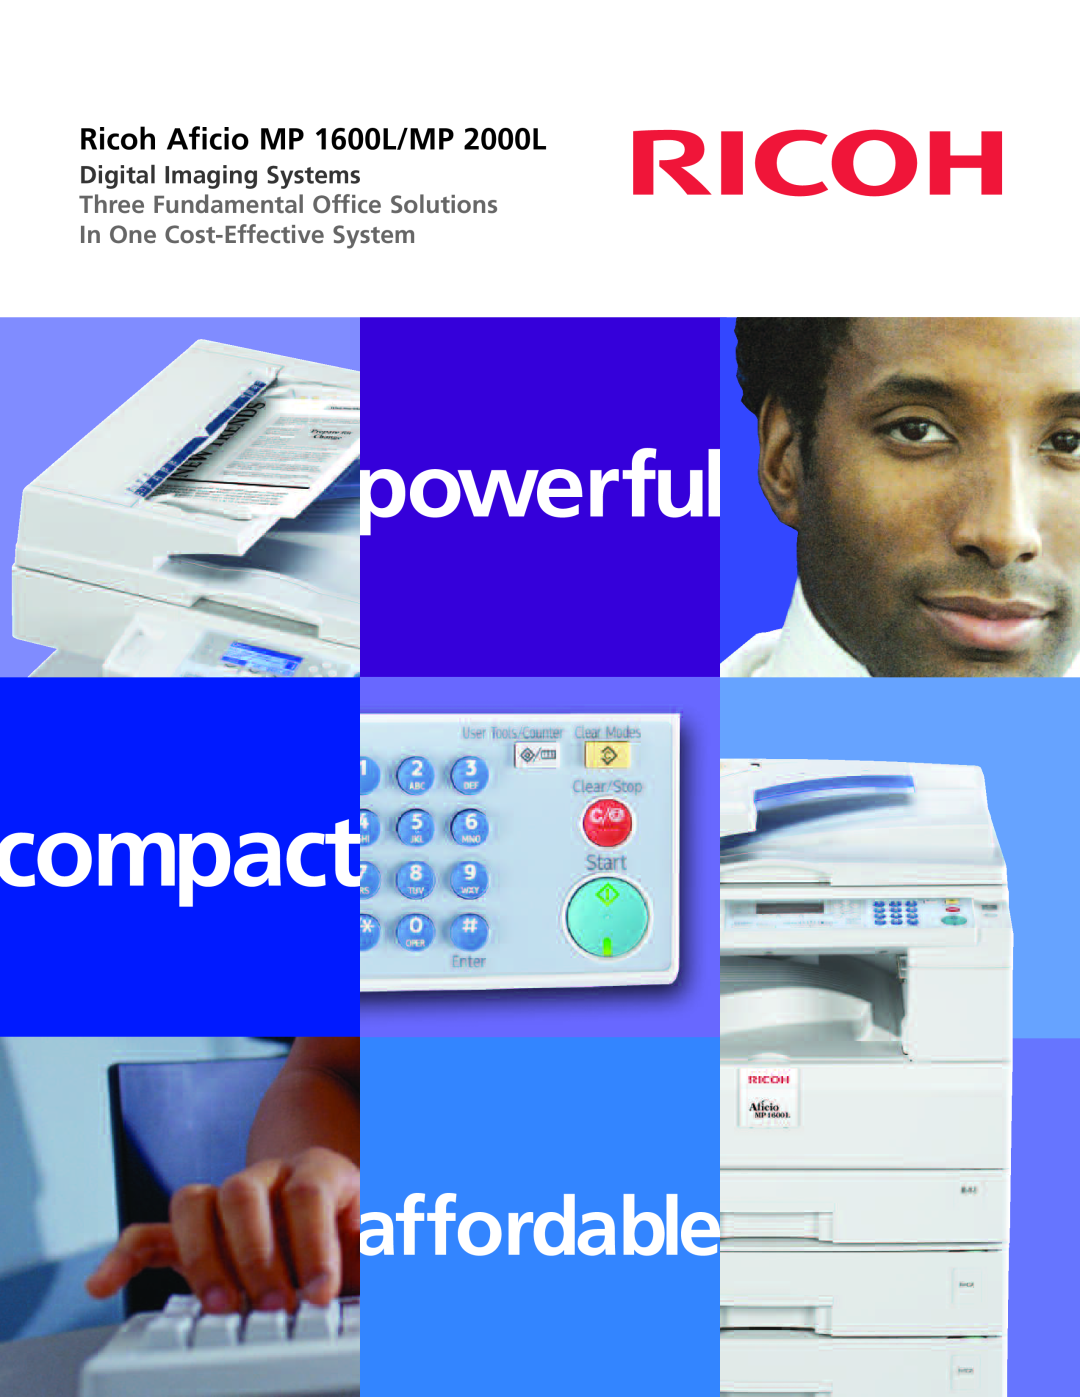 Ricoh MP1600L manual compact, powerful, affordable, Ricoh Aficio MP 1600L/MP 2000L, Digital Imaging Systems 